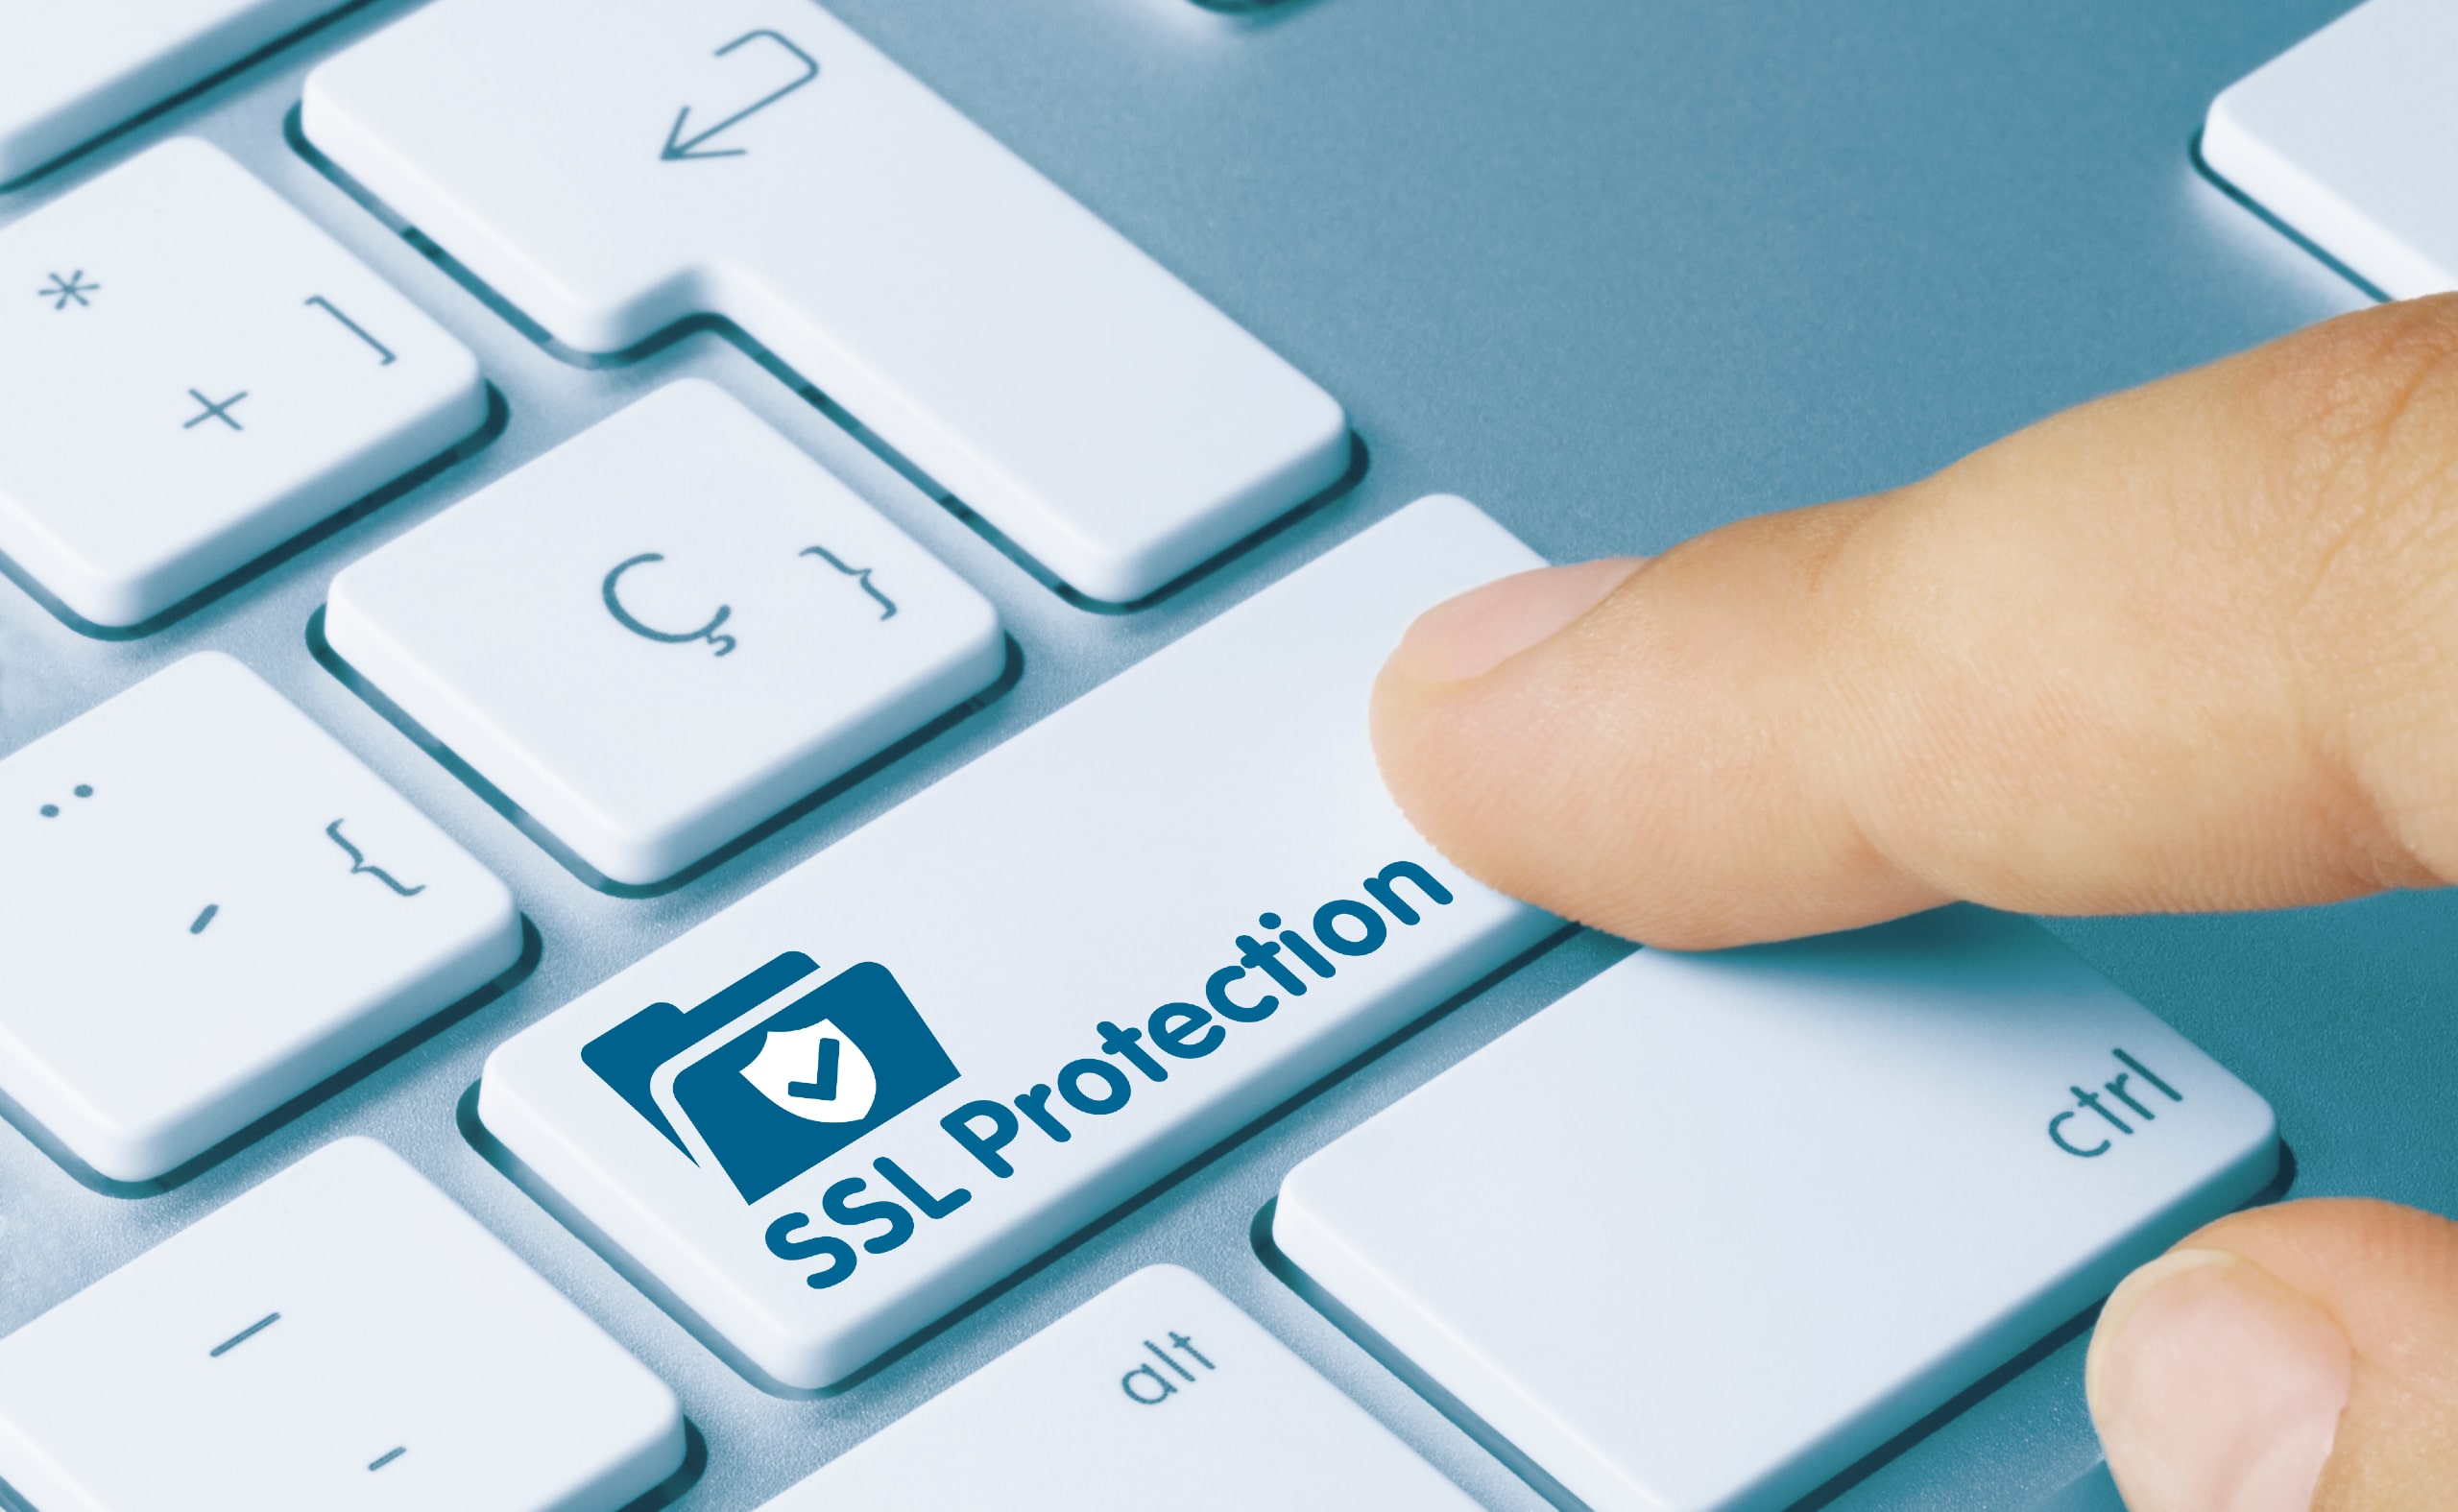 Secure Sockets Layer (SSL)